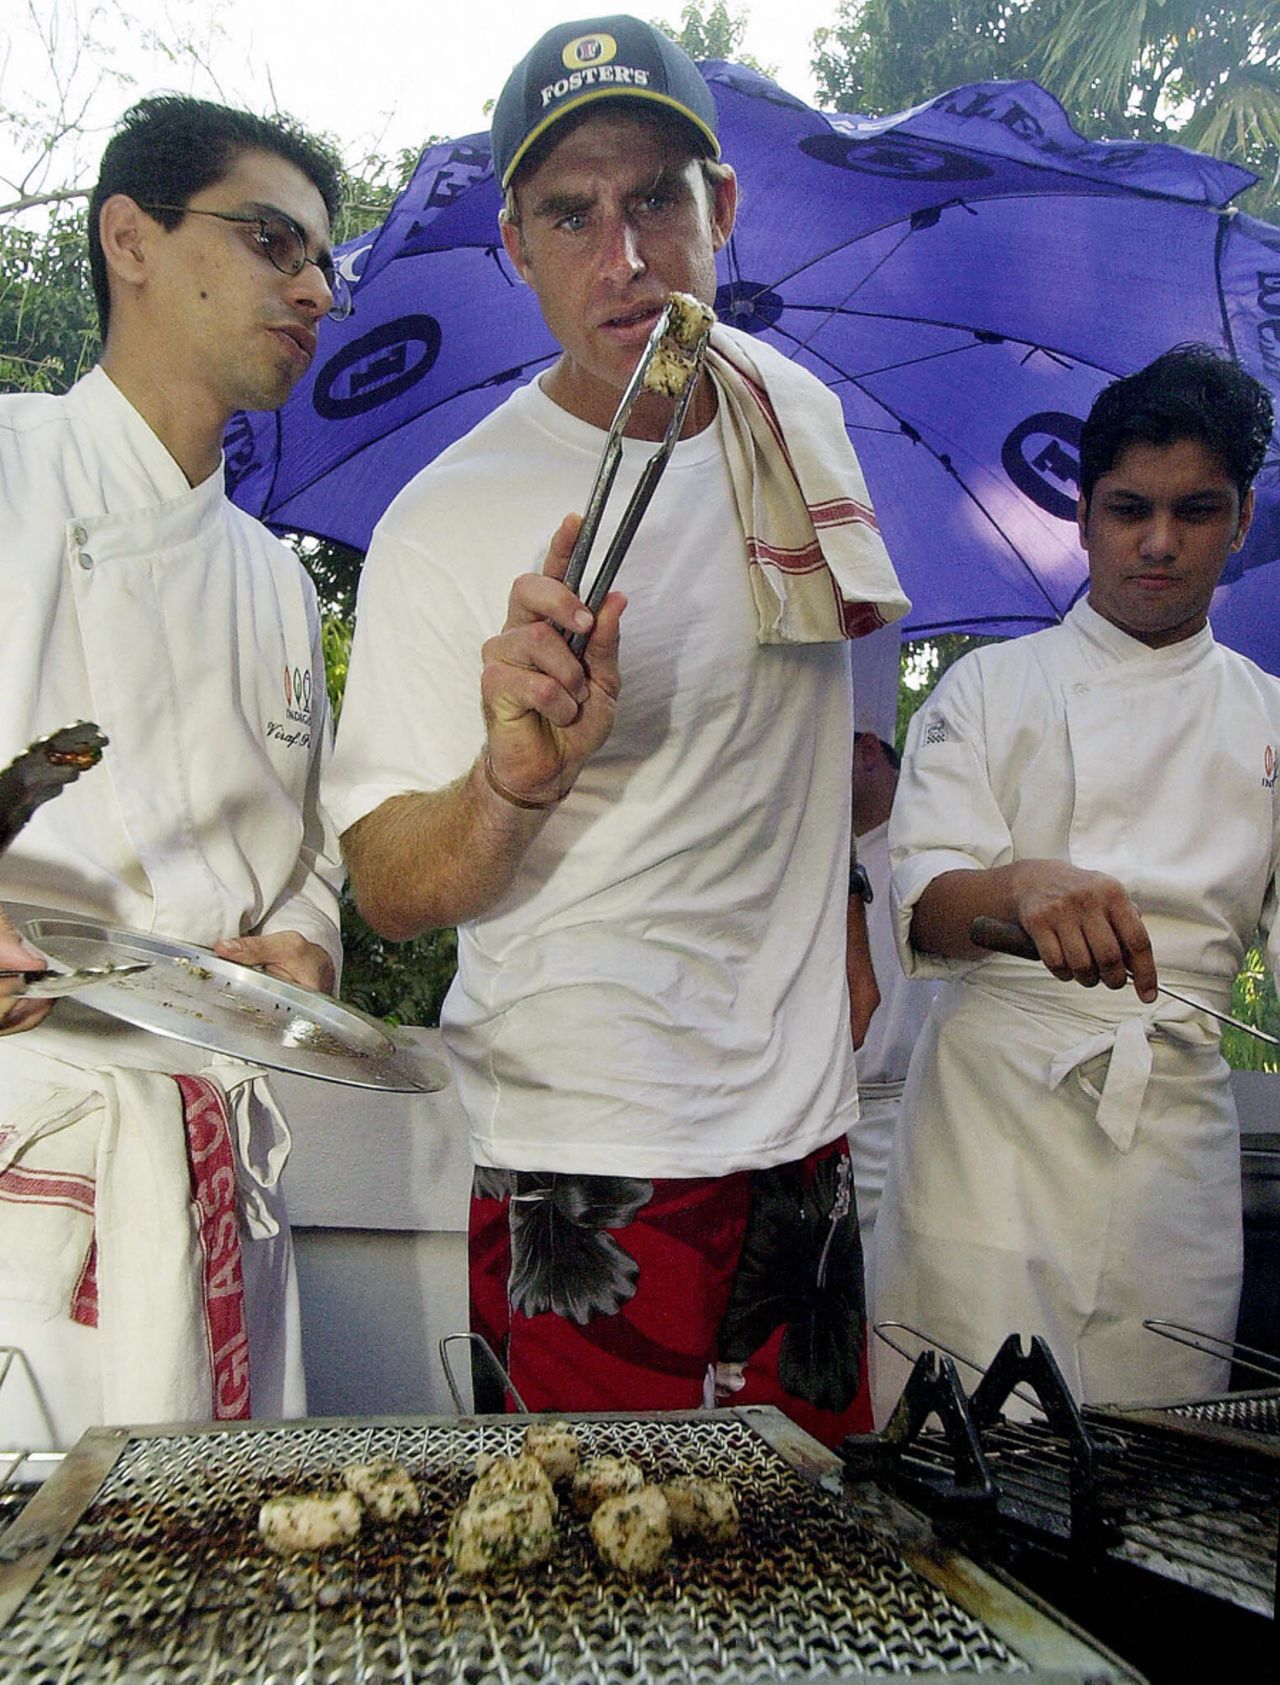 Matthew Hayden grills chicken at a sponsor's party in Mumbai